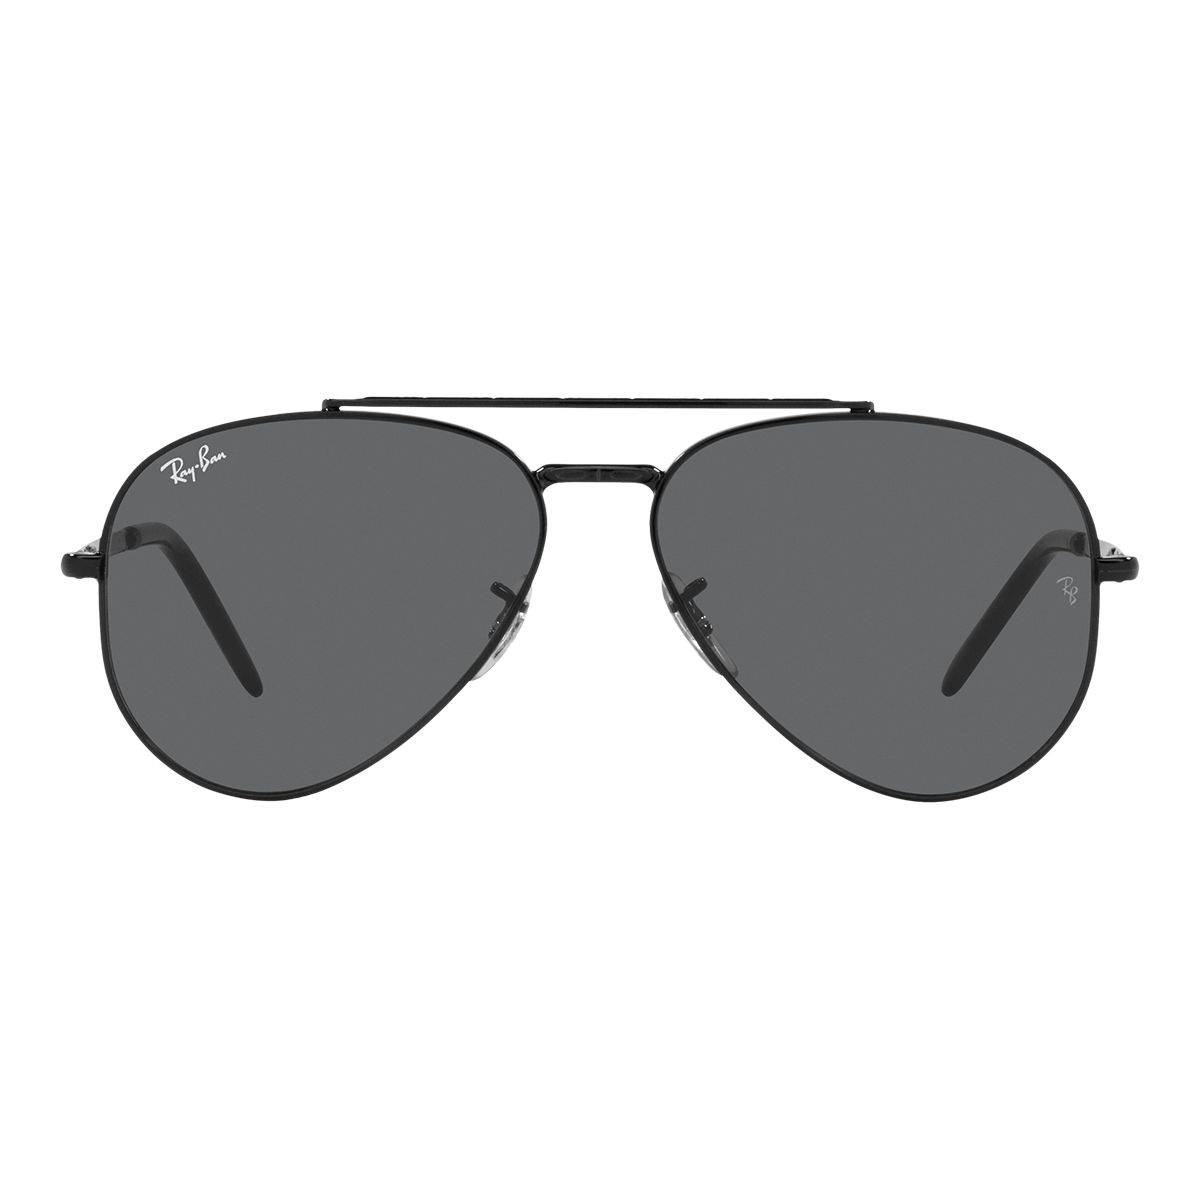 Image of Ray-Ban New Aviator Sunglasses